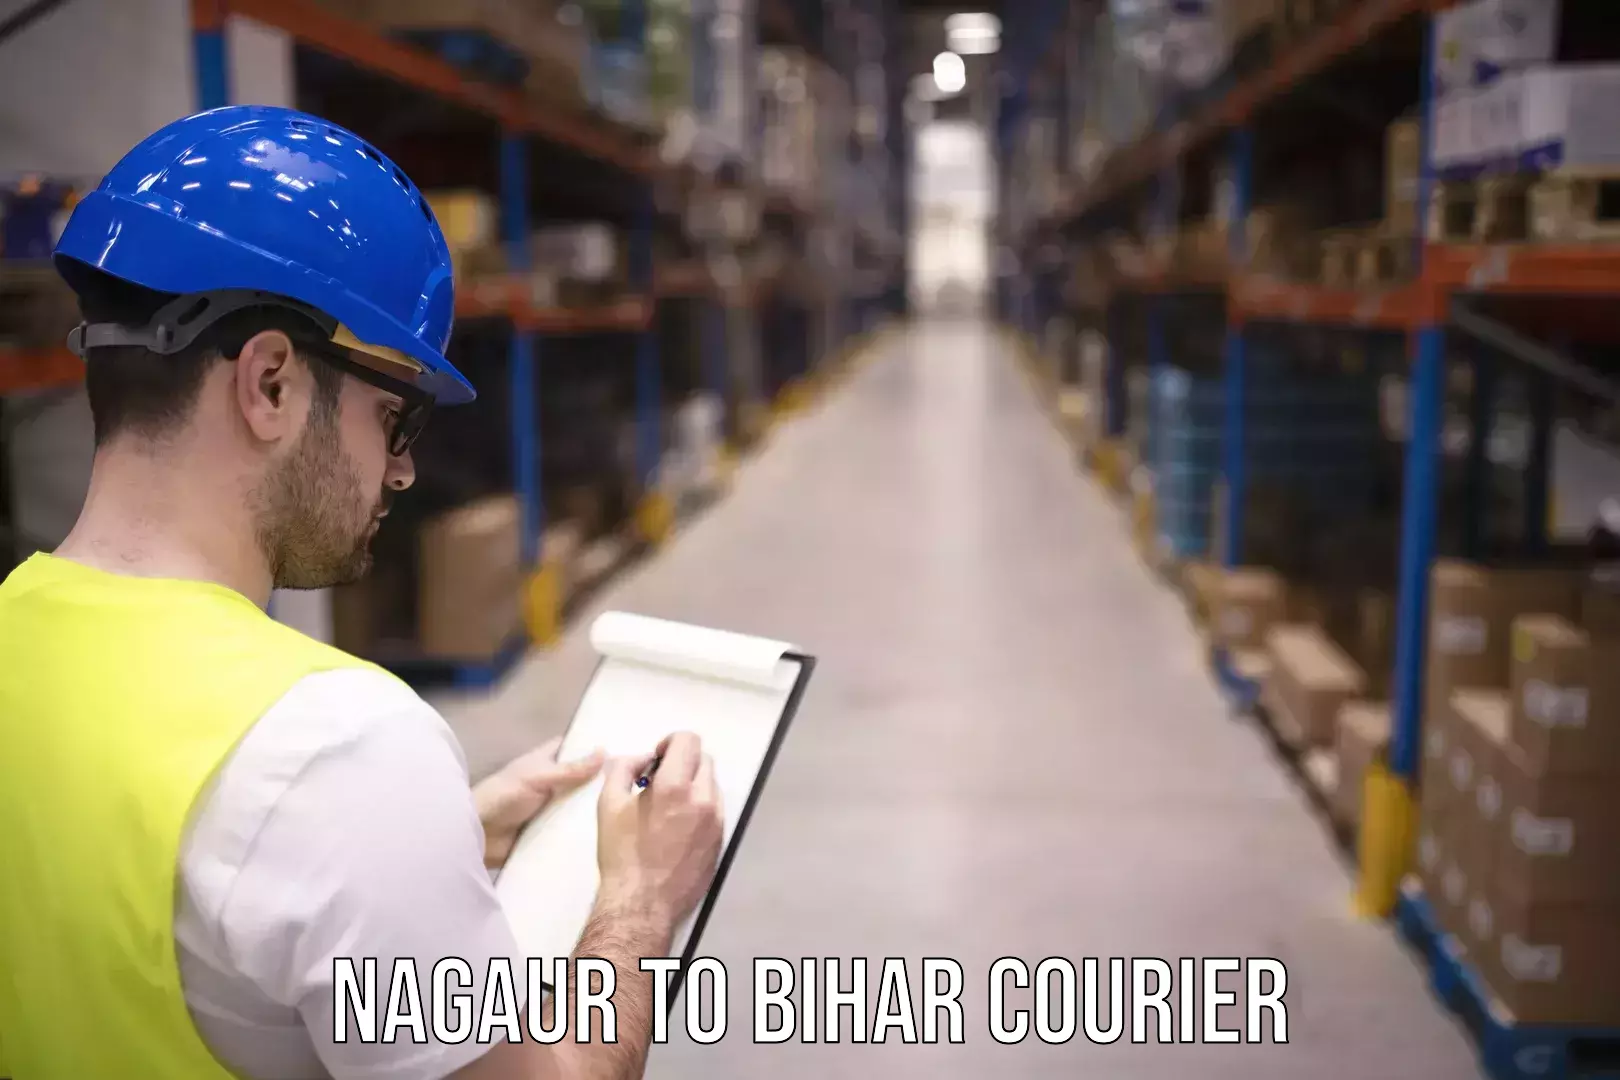 Courier service innovation Nagaur to Arrah